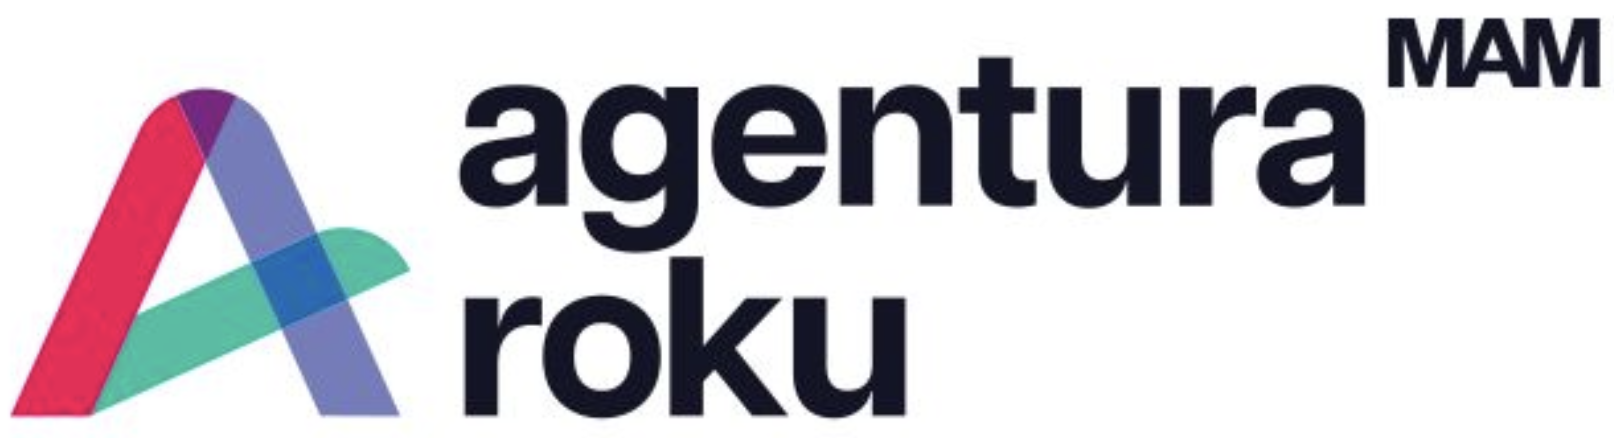 agentura-roku-logo.png